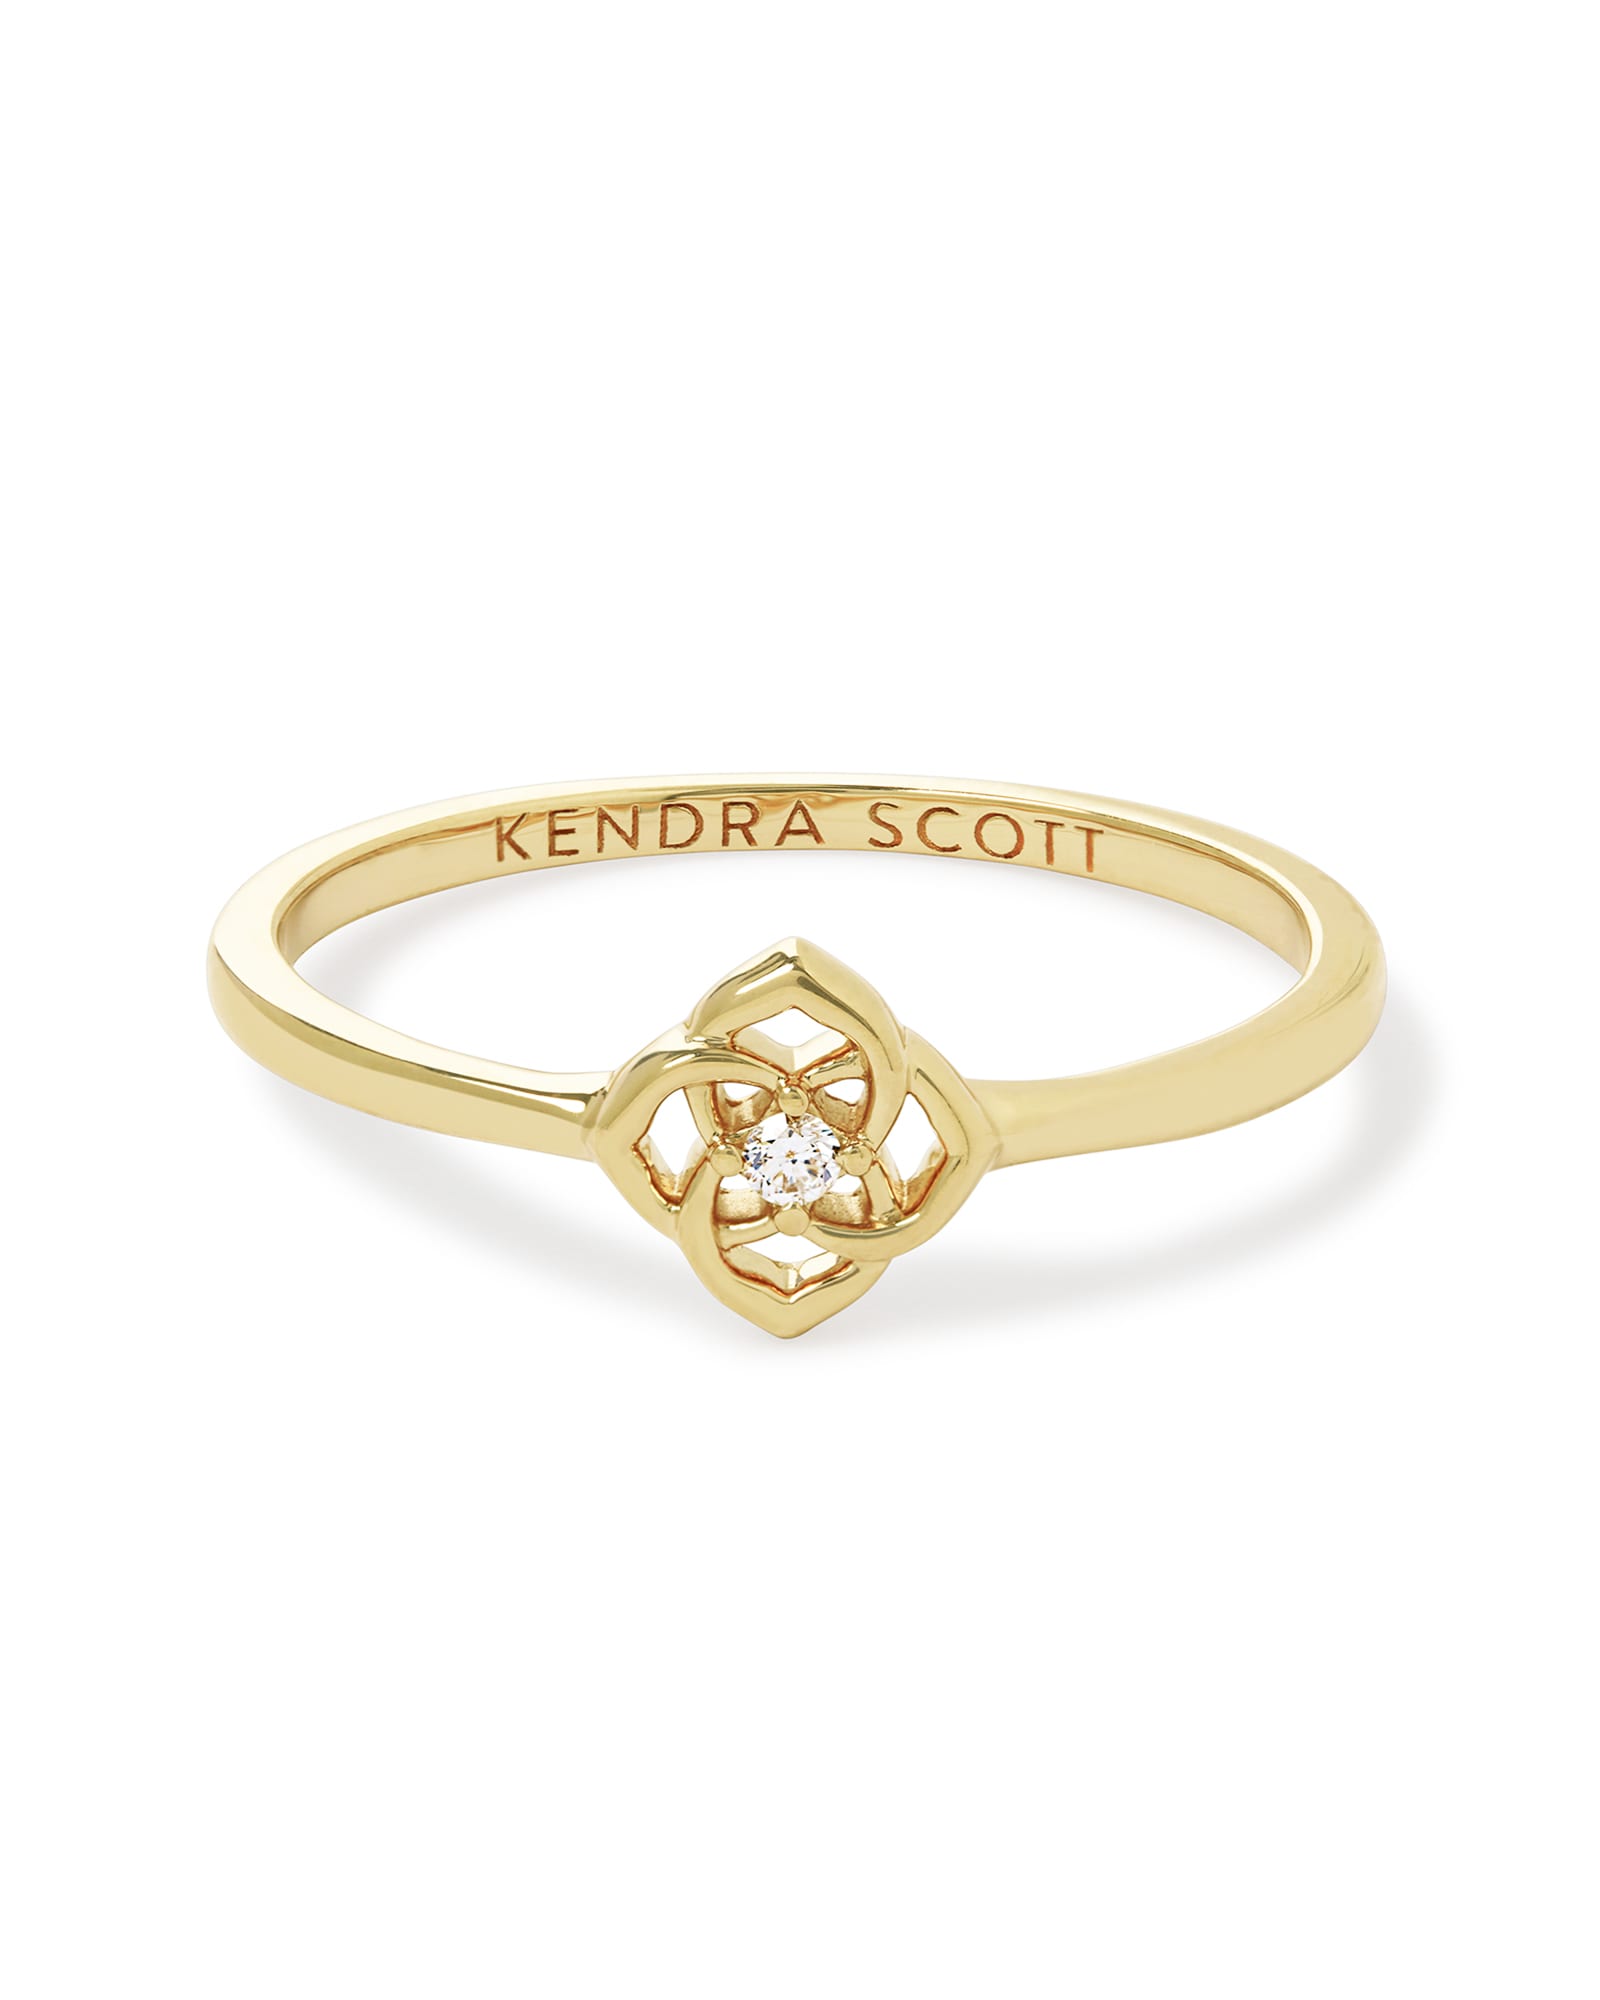 Kendra Scott Fleur 14k Yellow Gold Band Ring in White Diamond | Diamonds